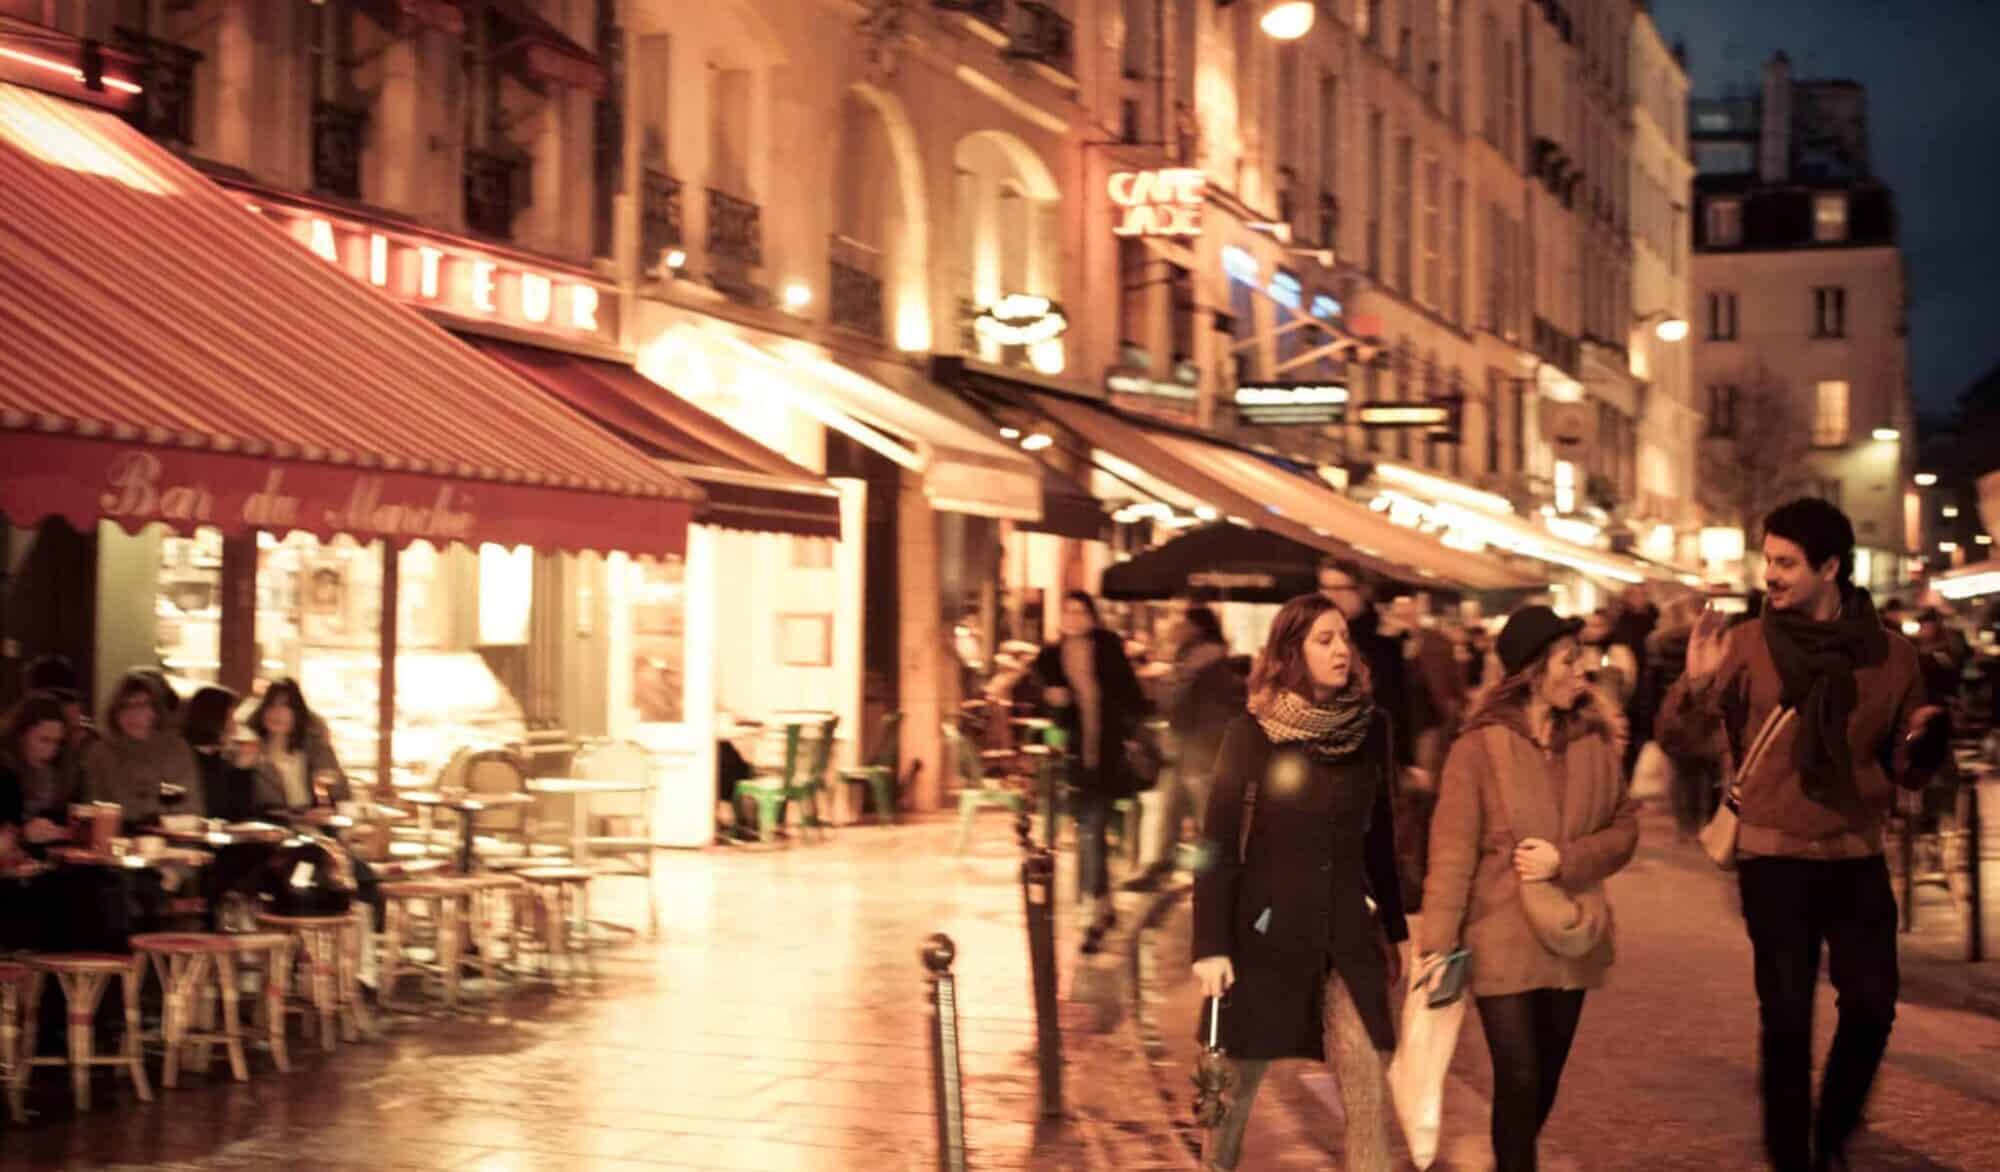 Three young Parisians strolling at night on a lit up Parisian boulevard.